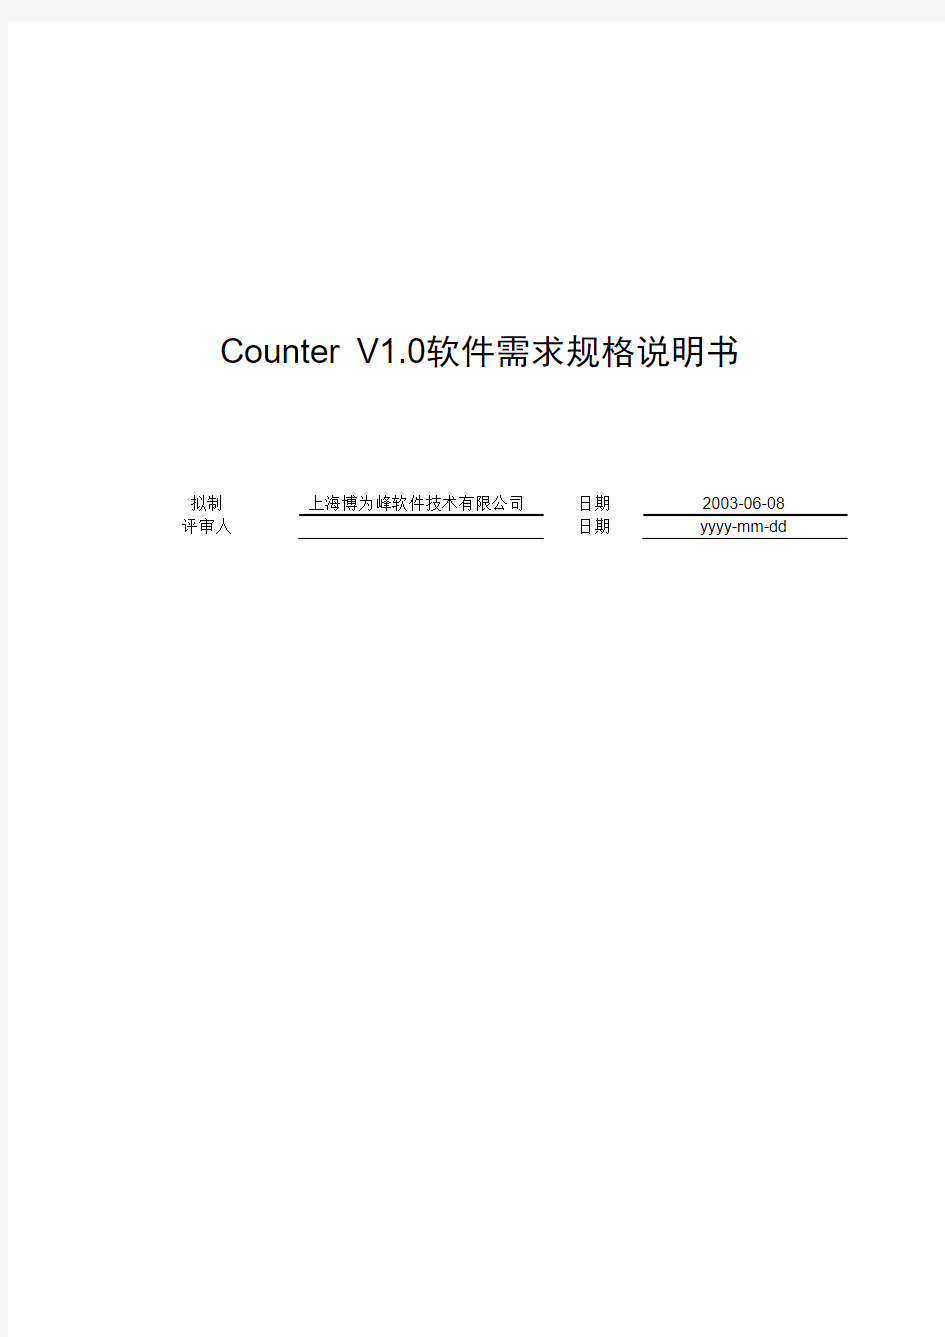 Counter V1.0软件需求规格说明书(写用例用)